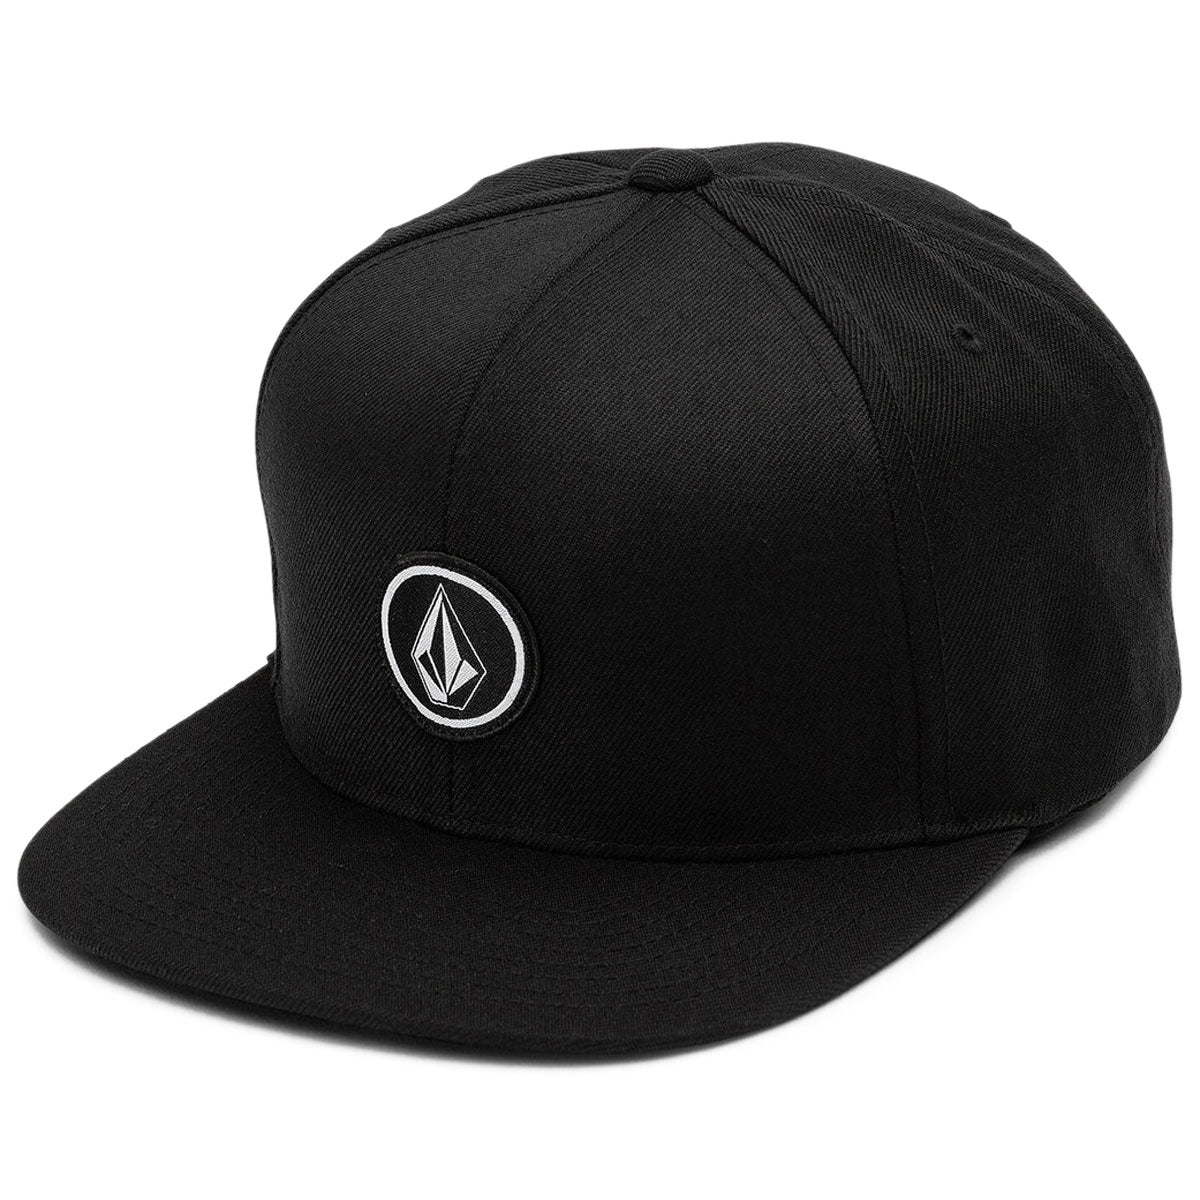 Volcom Quarter Twill Hat - Black/Black image 1